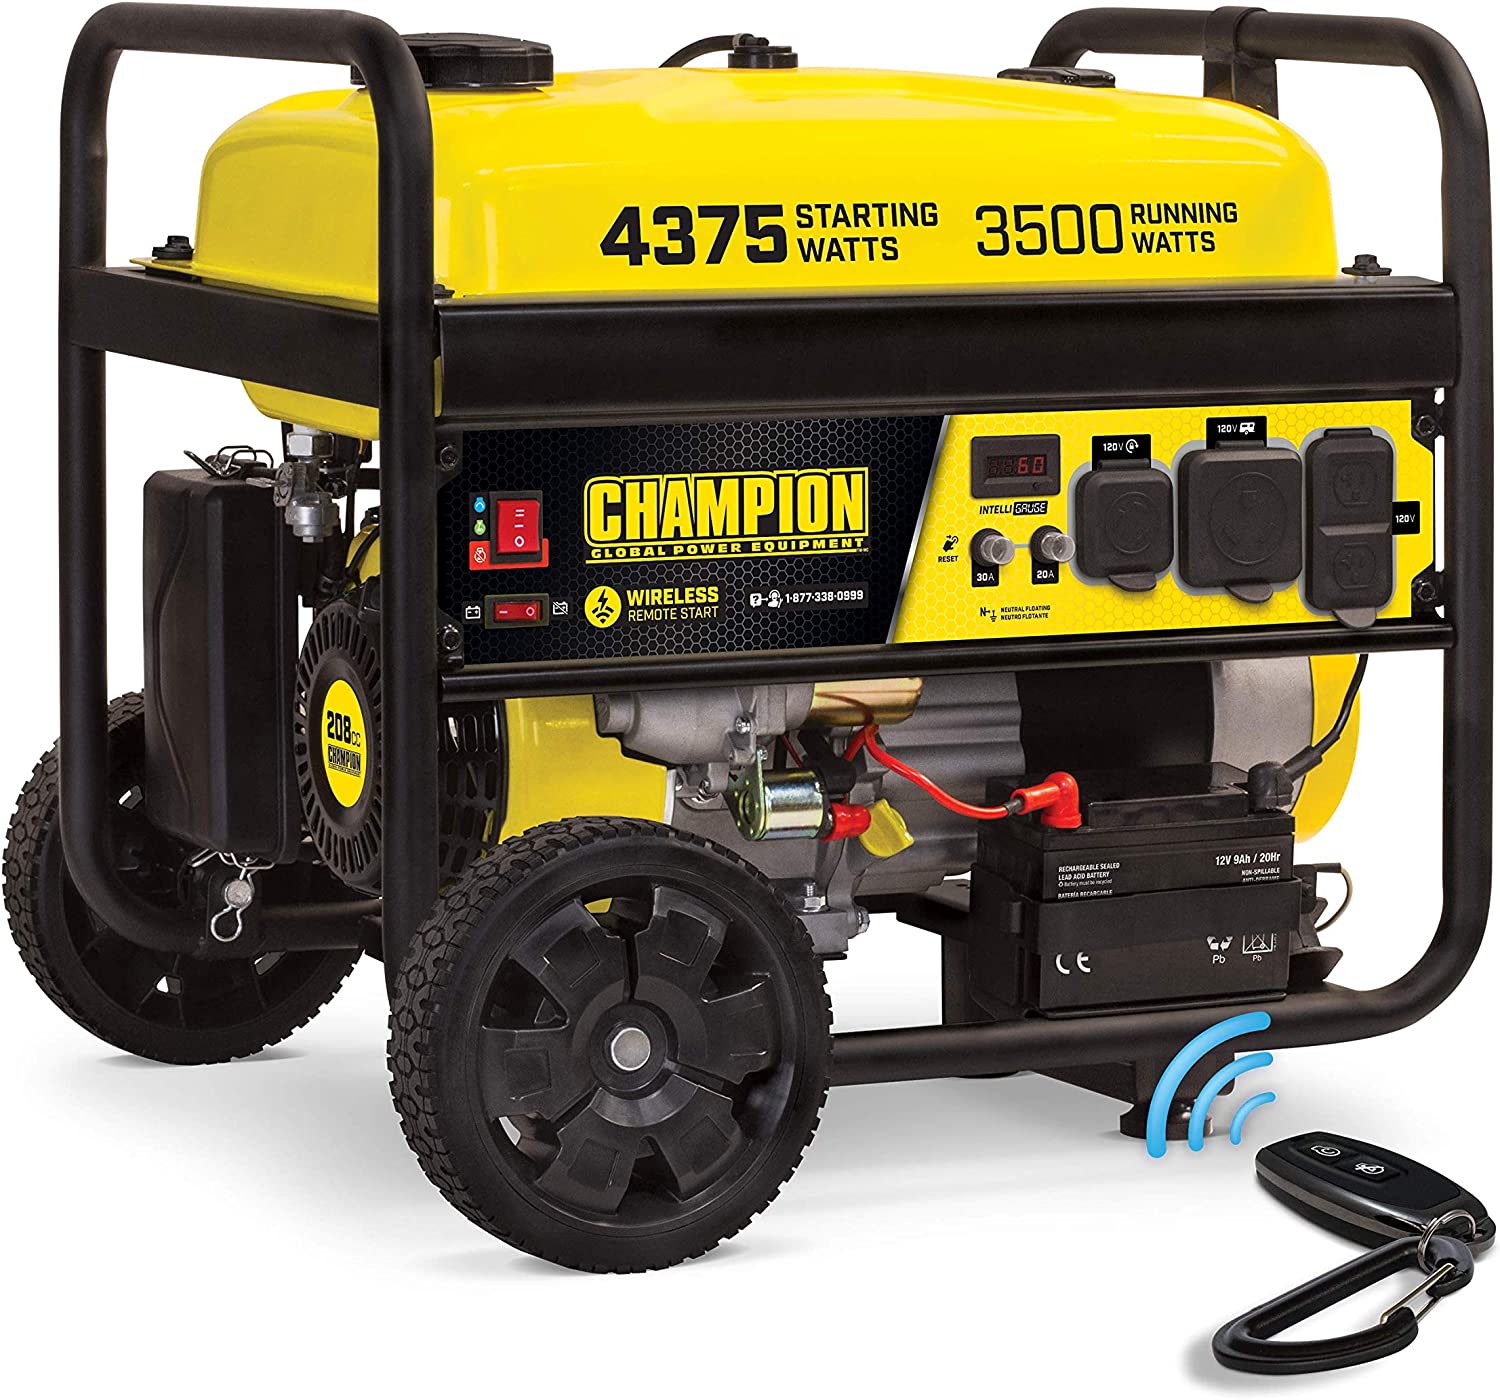 Champion Power Equipment 100554 4375/3500-Watt RV Ready Portable Generator with Wireless Remote Start, CARB $403 + Free Shipping